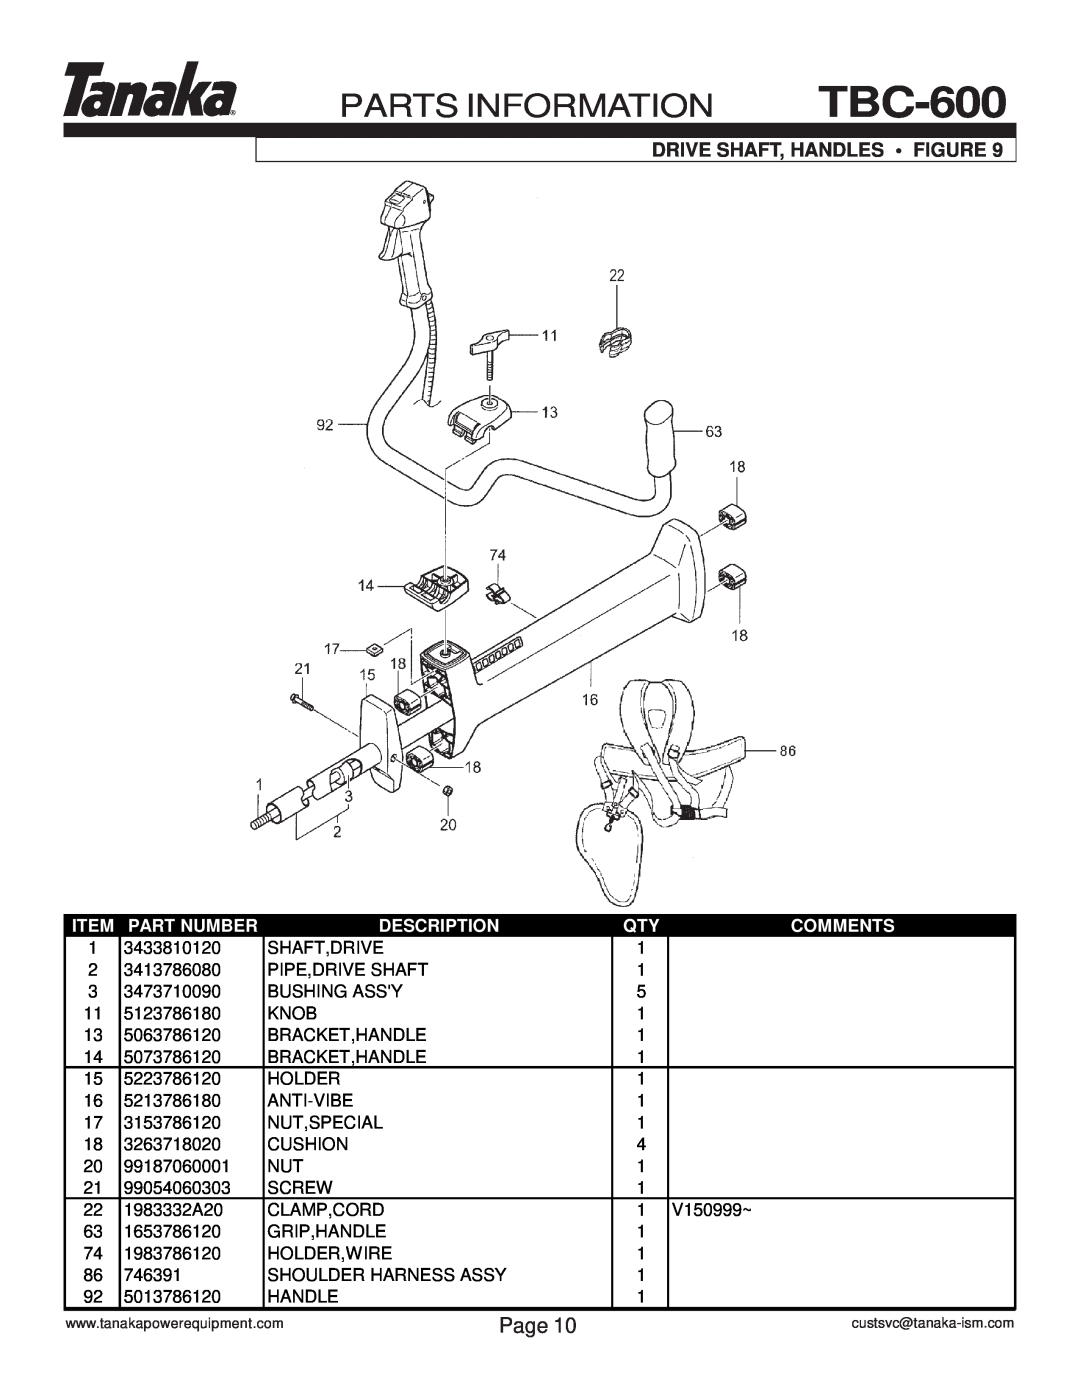 Tanaka TBC-600 manual Drive Shaft, Handles Figure, Parts Information, Page, Part Number, Description, Comments 